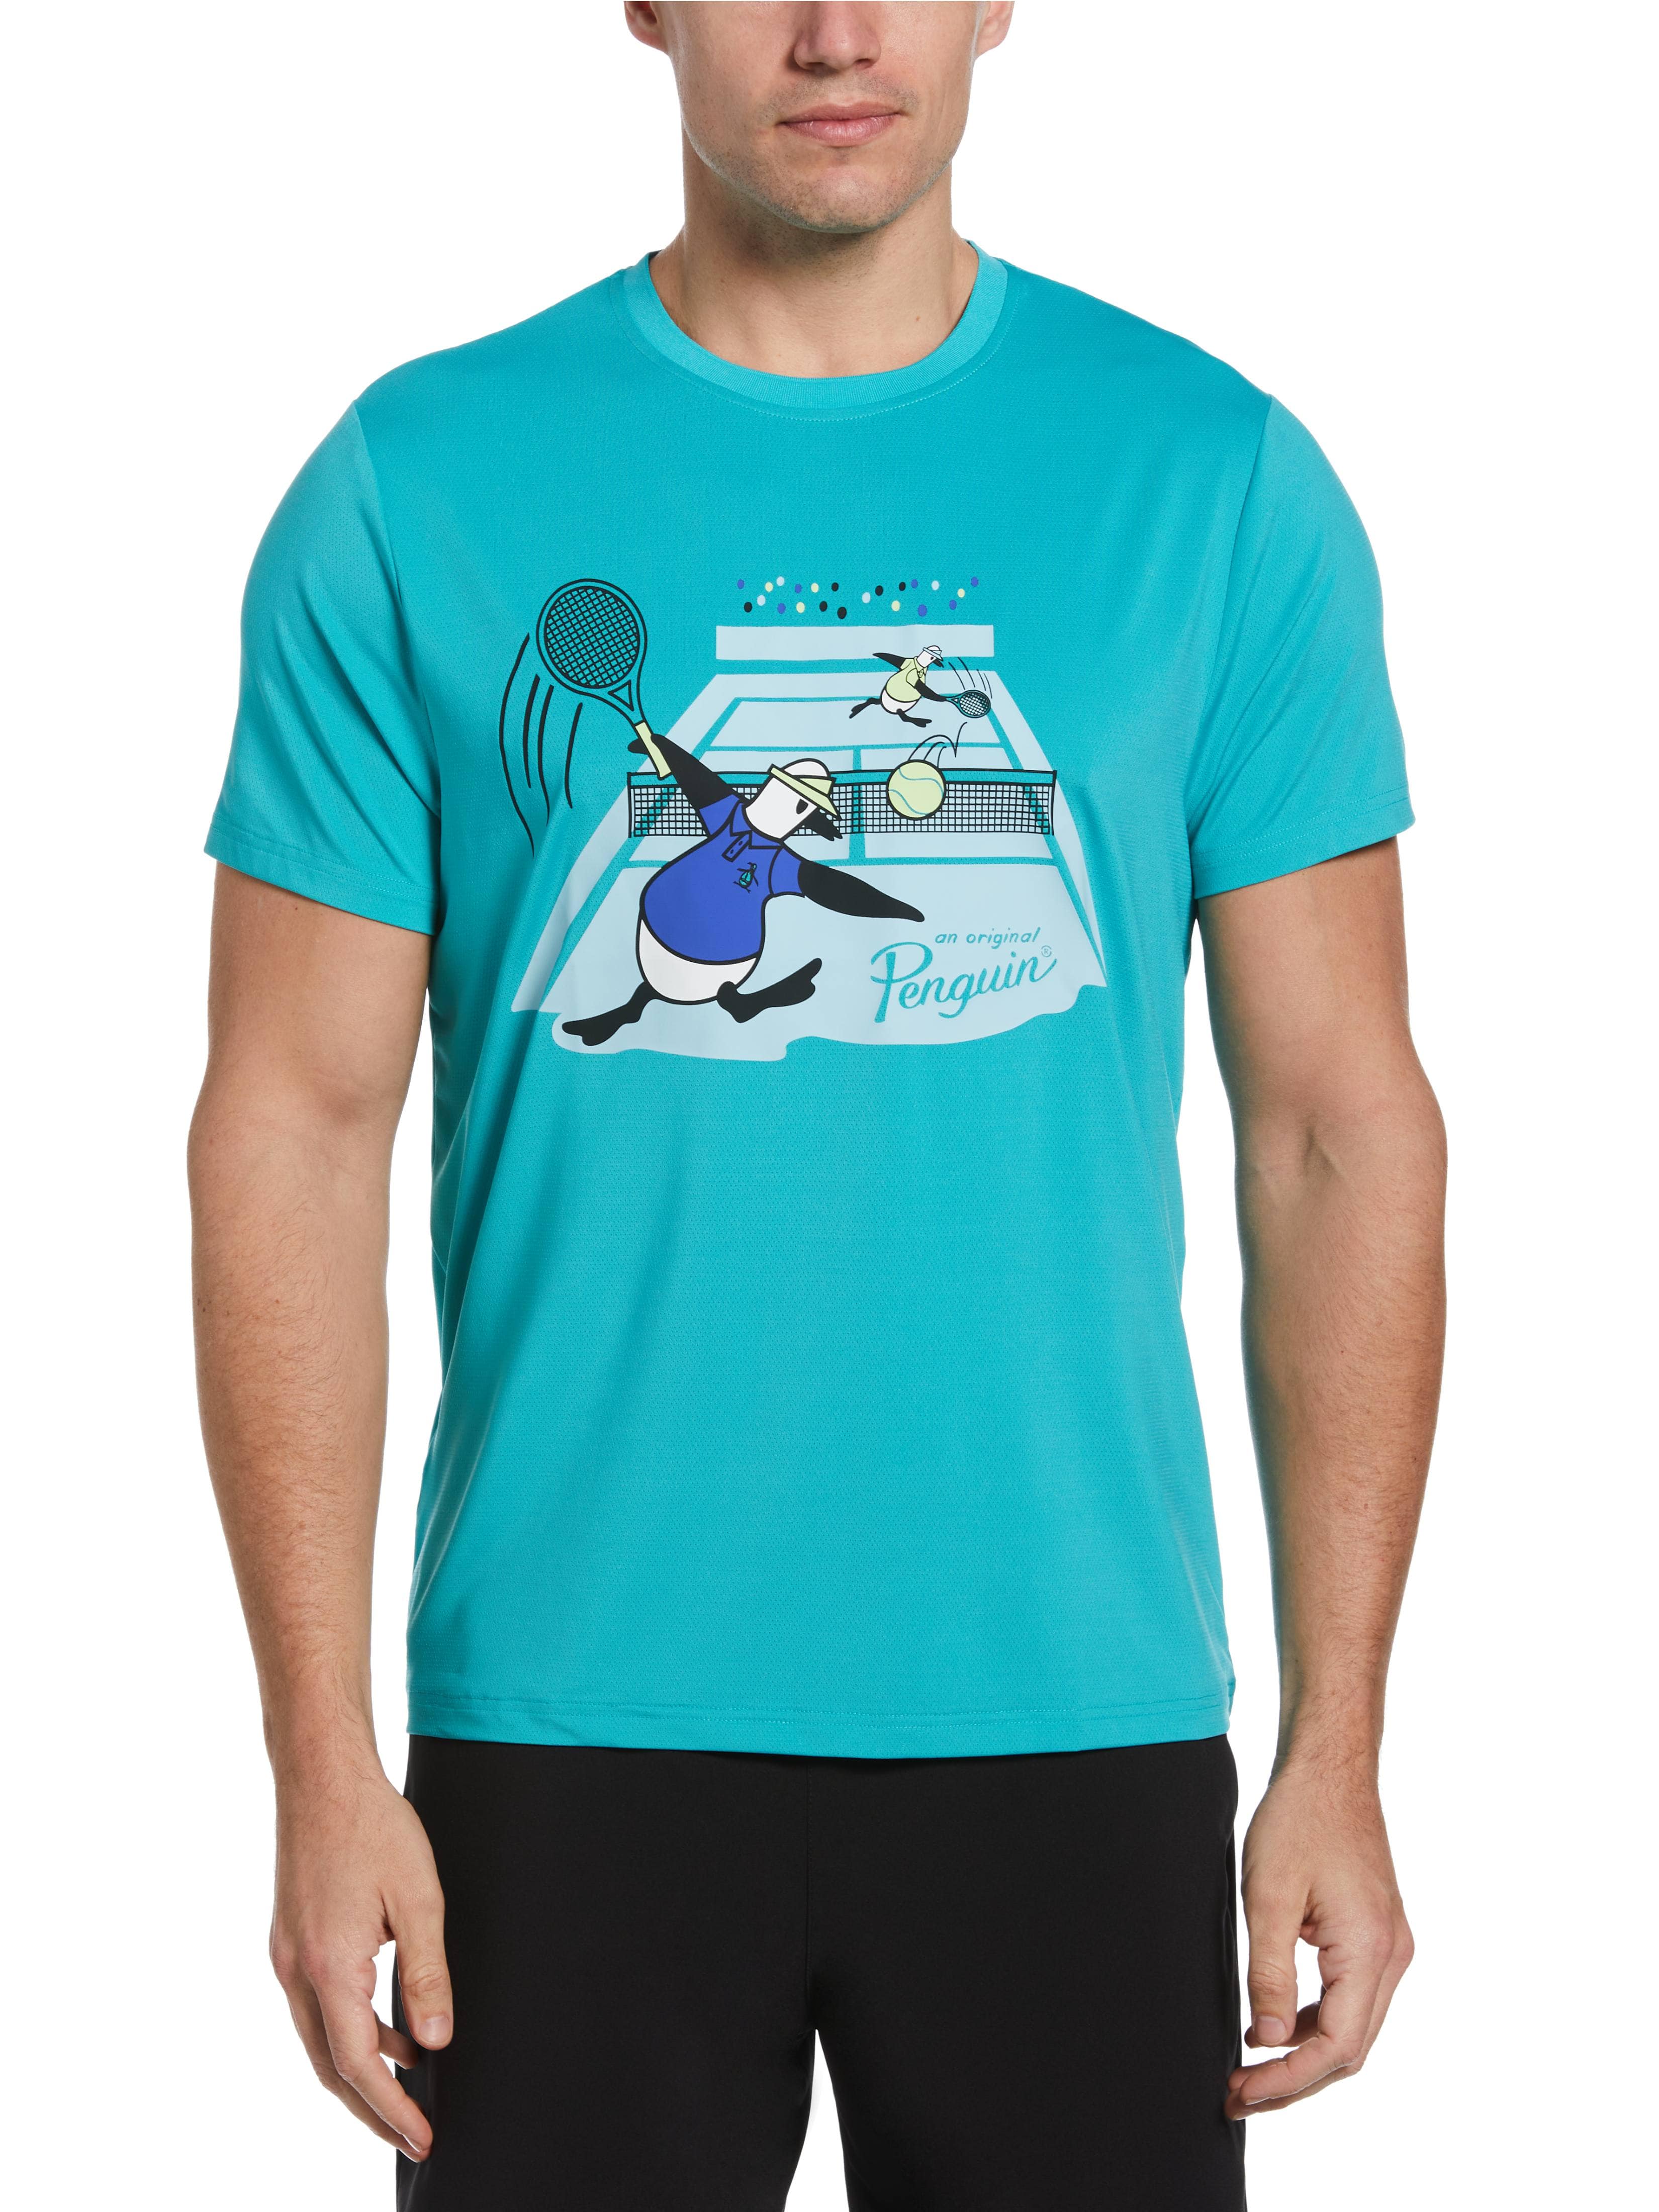 Original Penguin Mens Original Performance Graphic Tennis T-Shirt, Size 2XL, Baltic Green, Polyester/Recycled Polyester/Elastane | Golf Apparel Shop